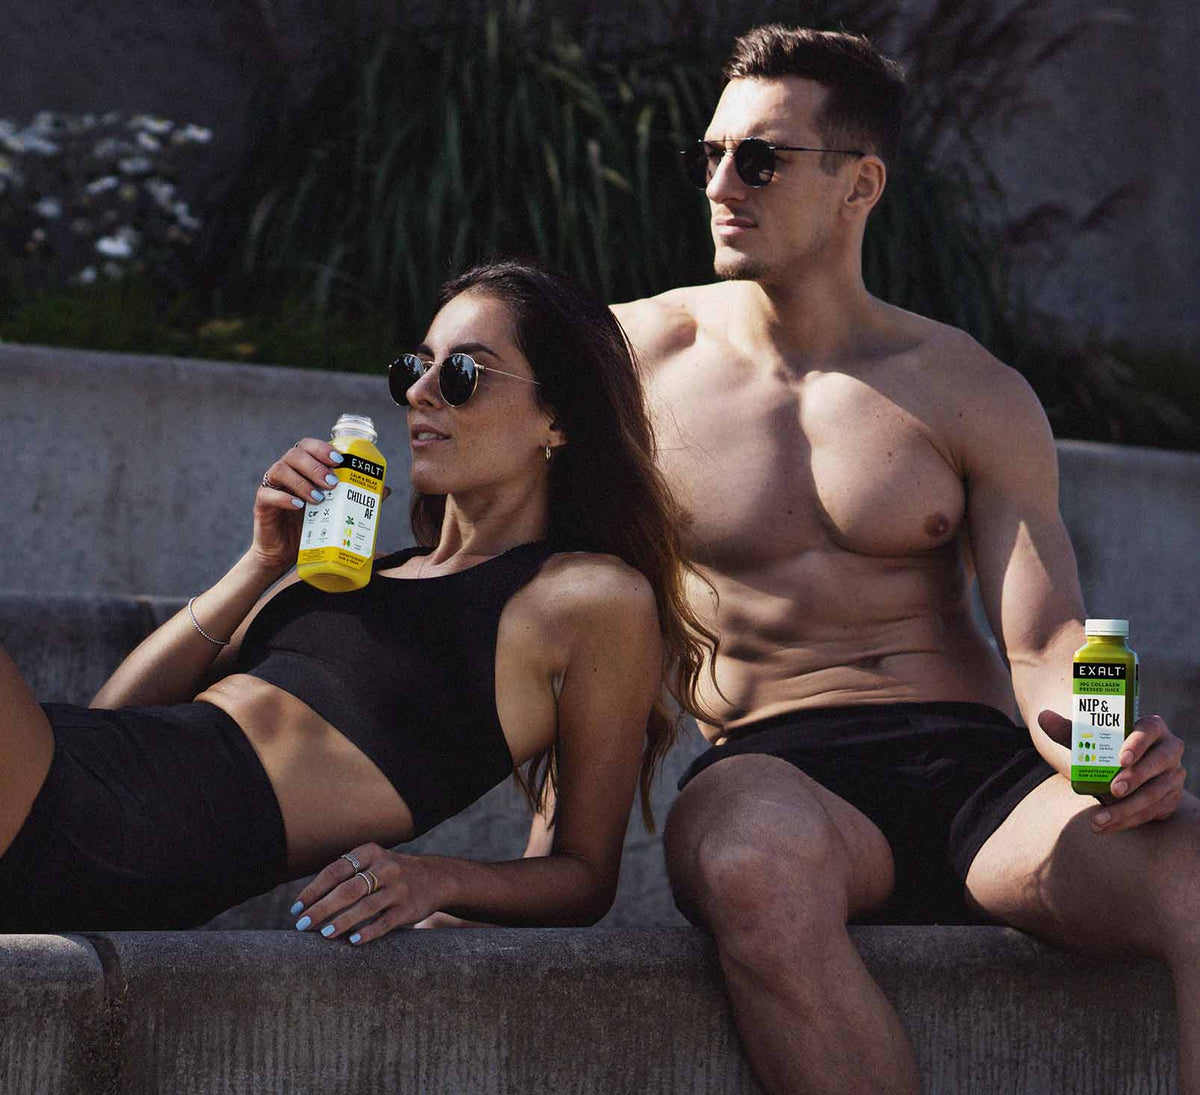 two people enjoying EXALT juices wearing activewear